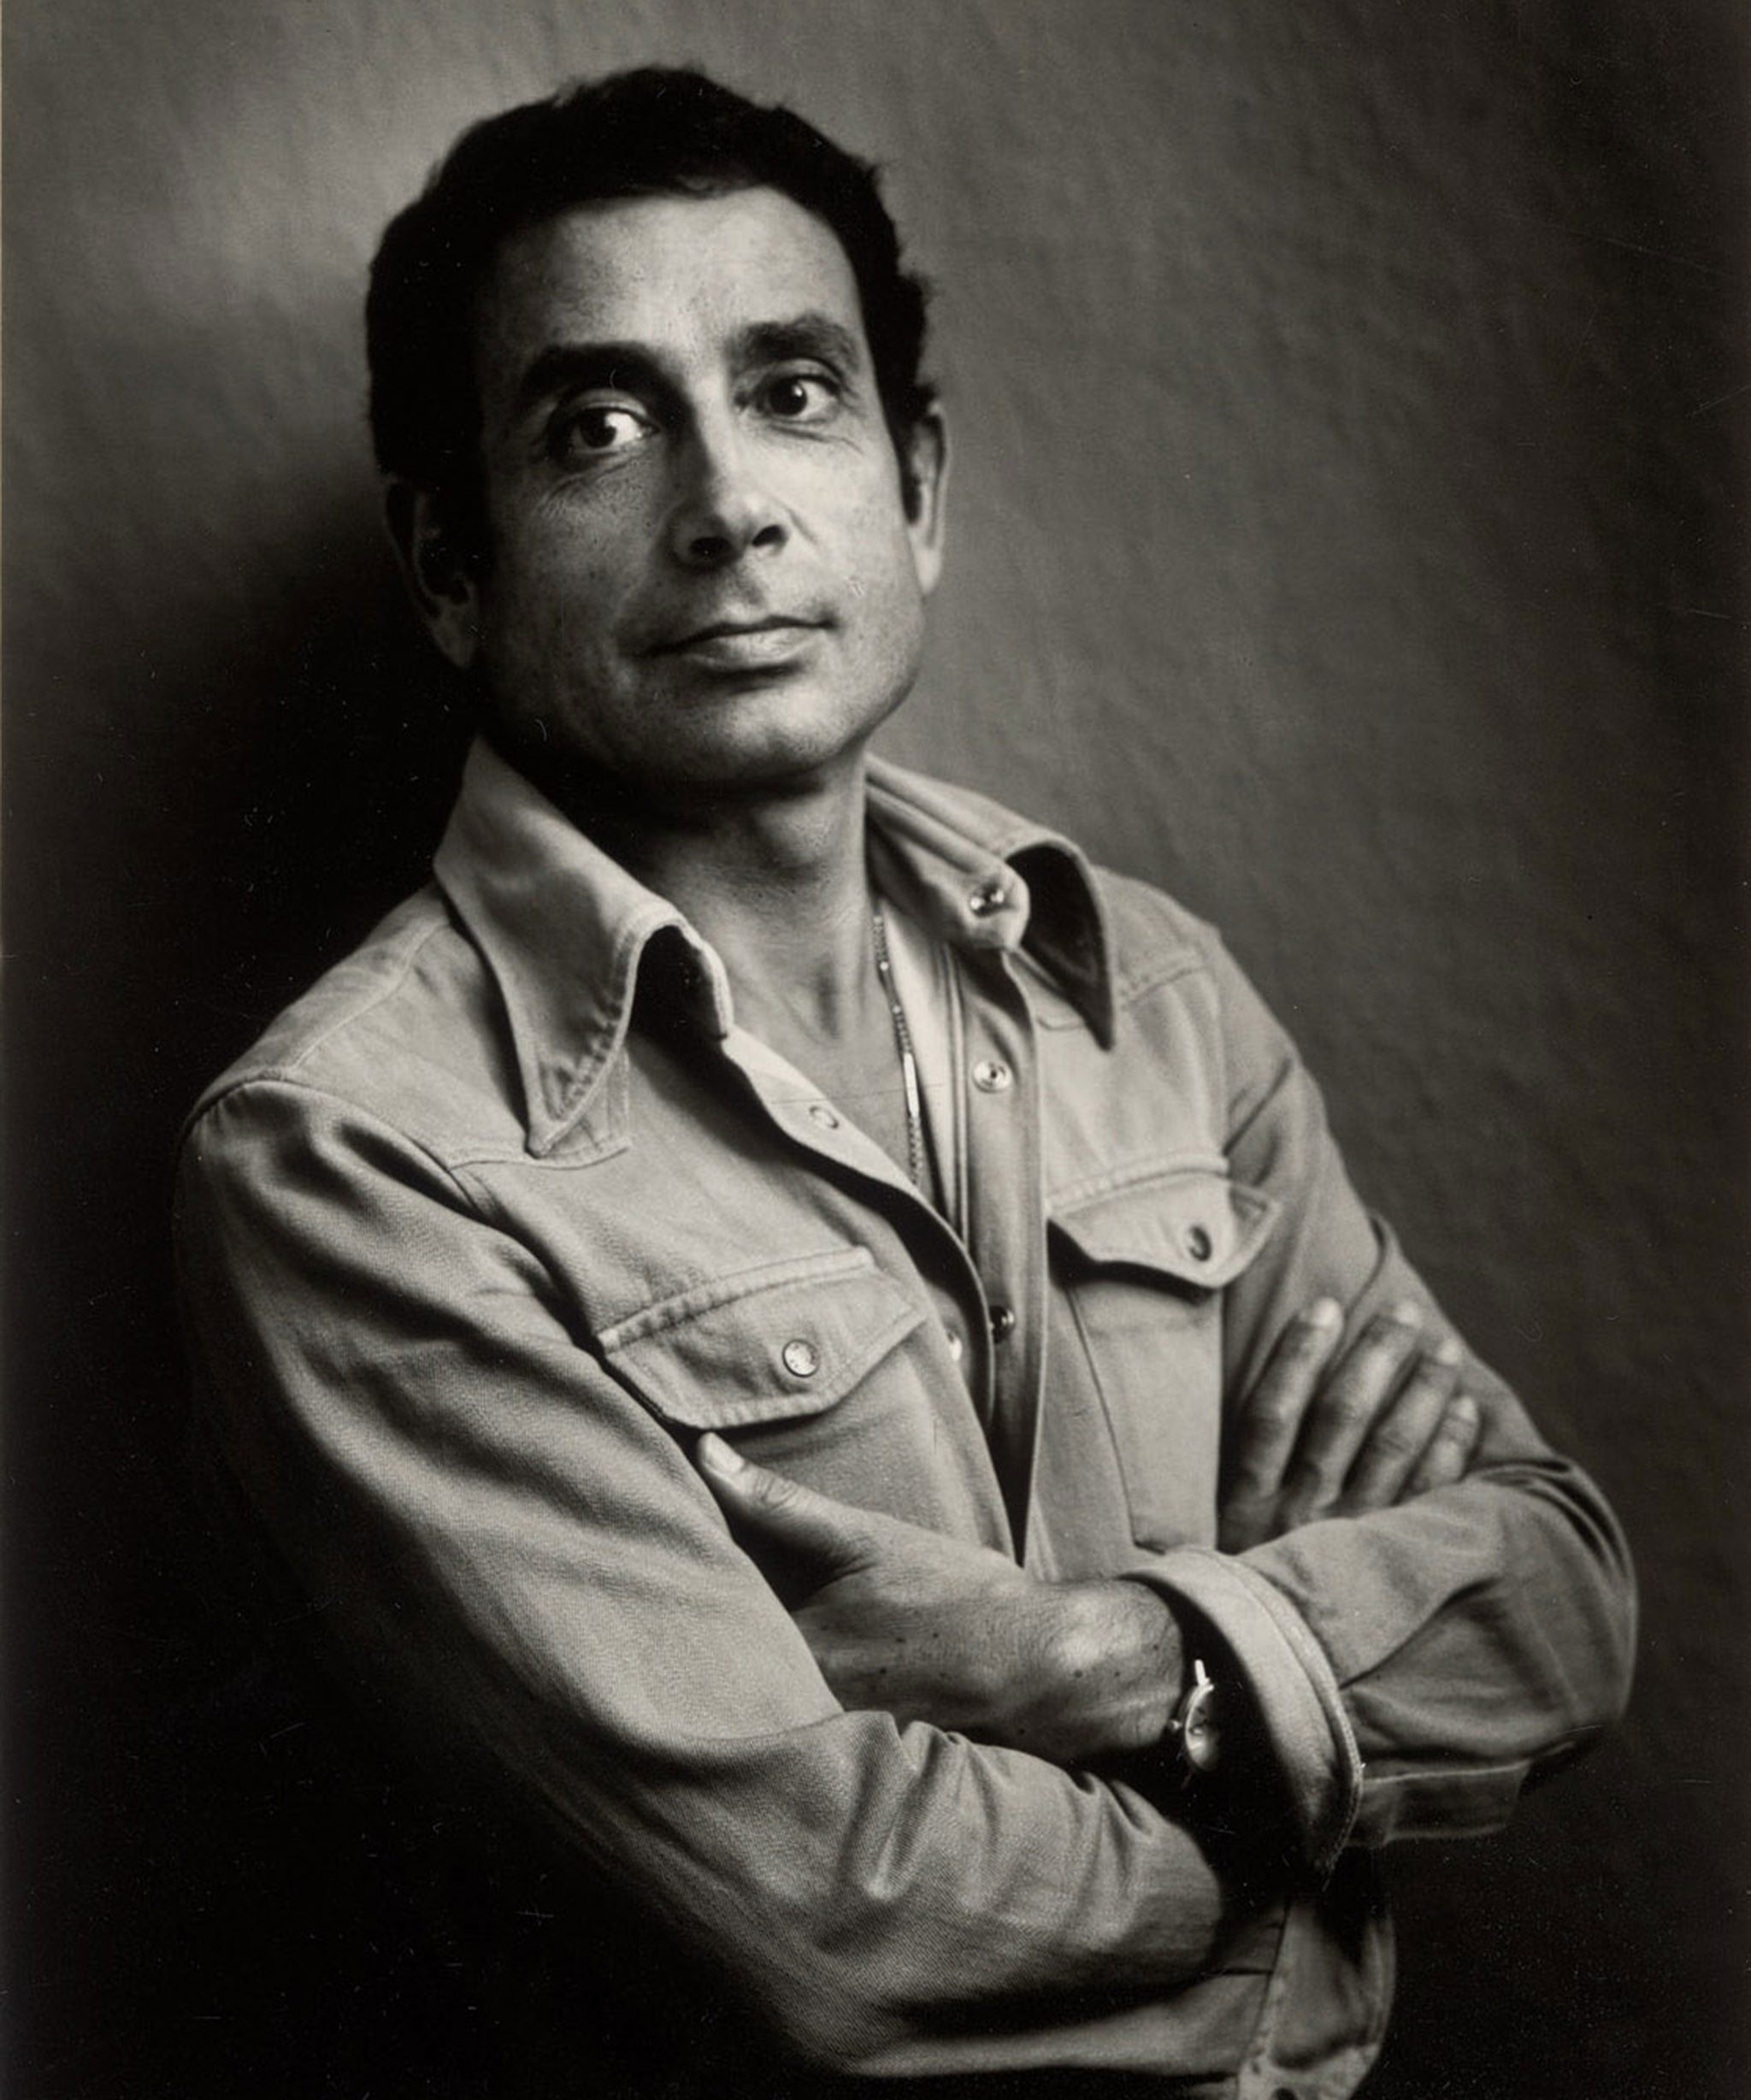 Manuel Jorge en una imagen de 1976.